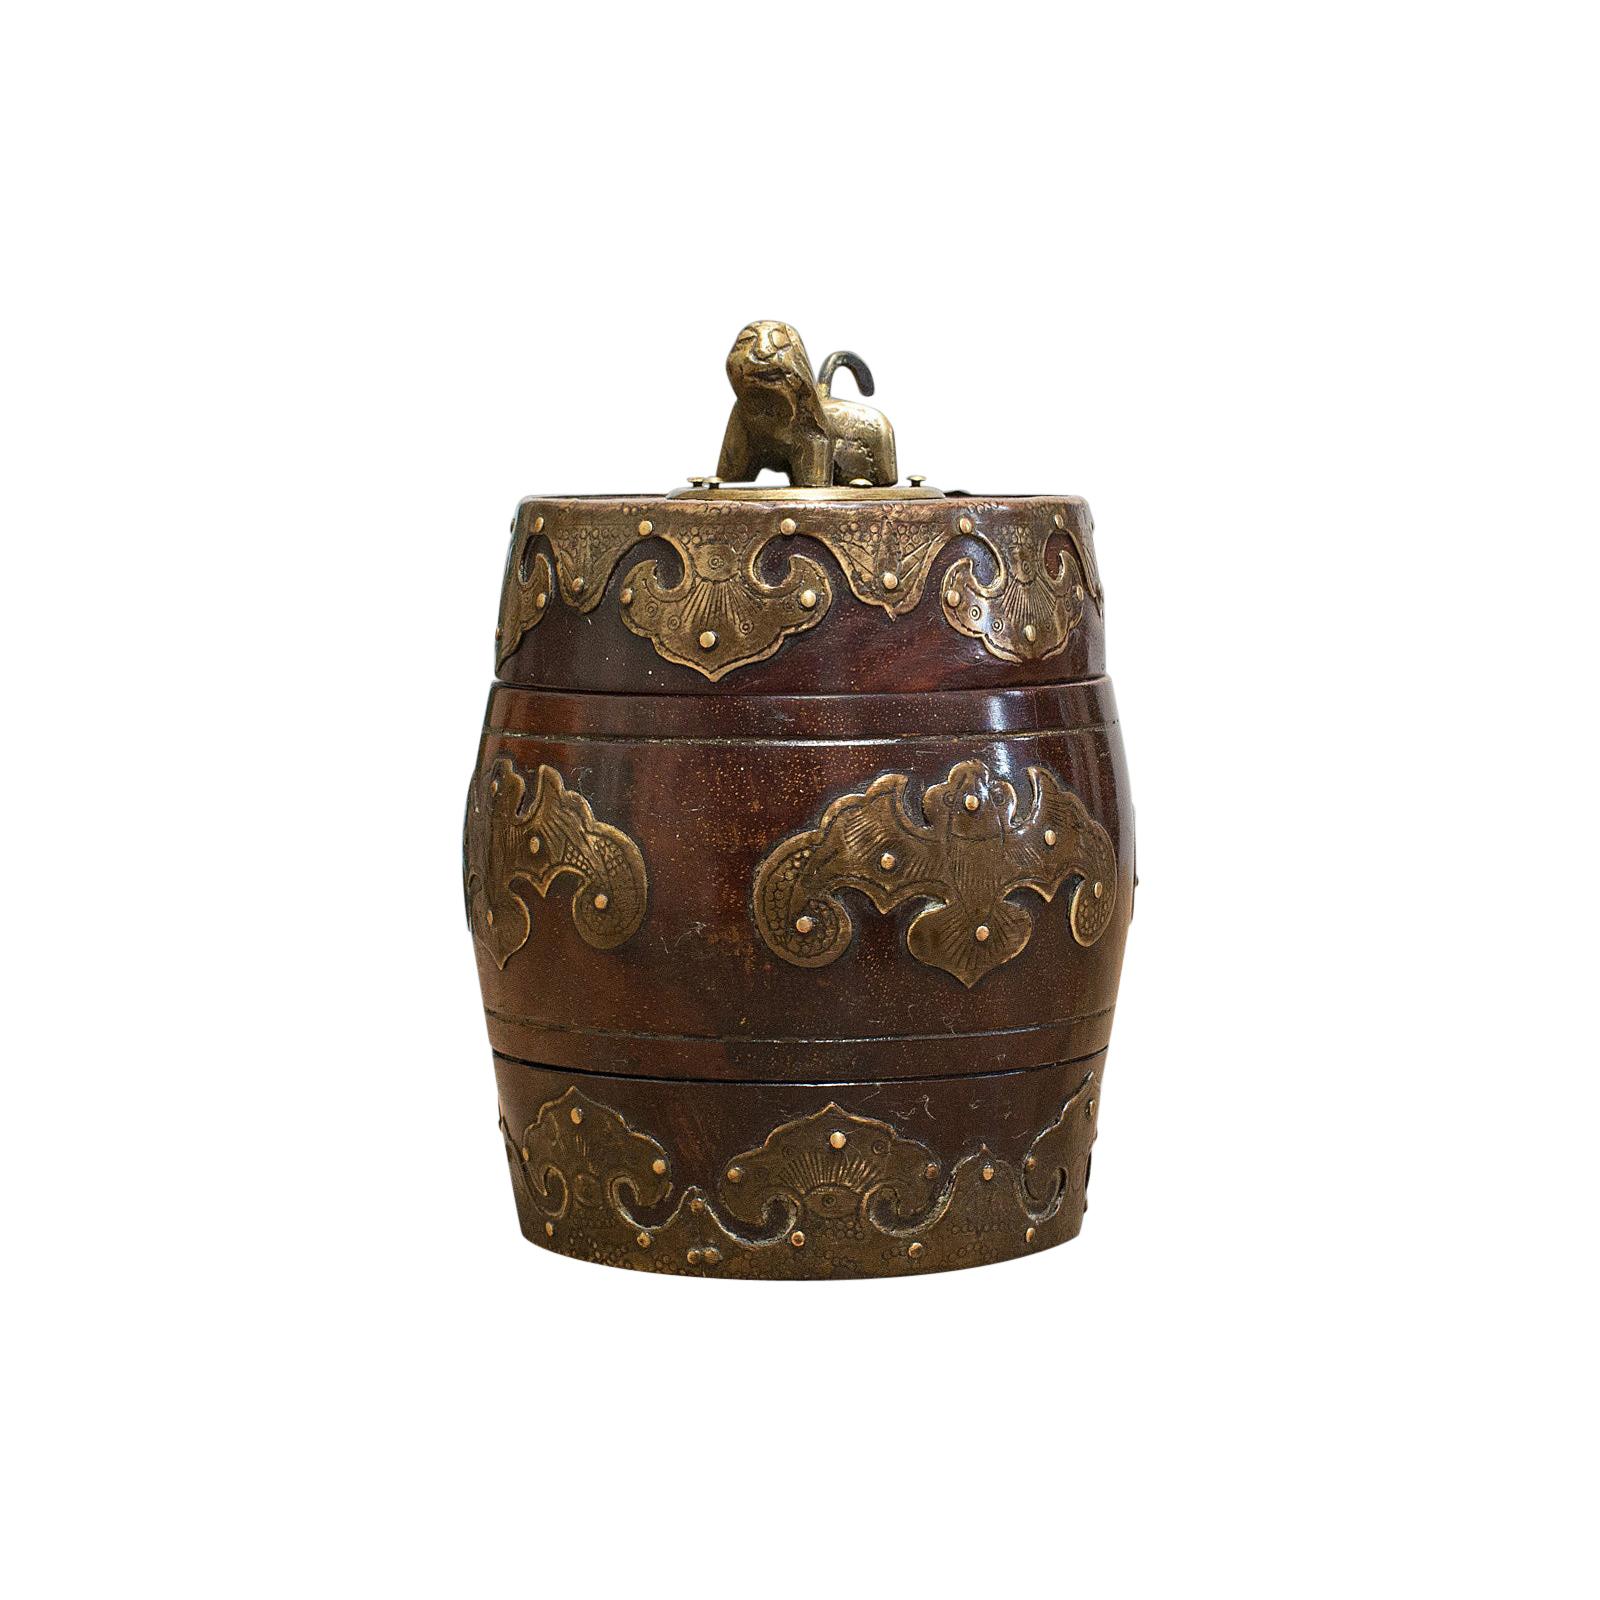 Small Antique Spice Jar, Chinese, Mahogany, Brass, Decorative Pot, Victorian